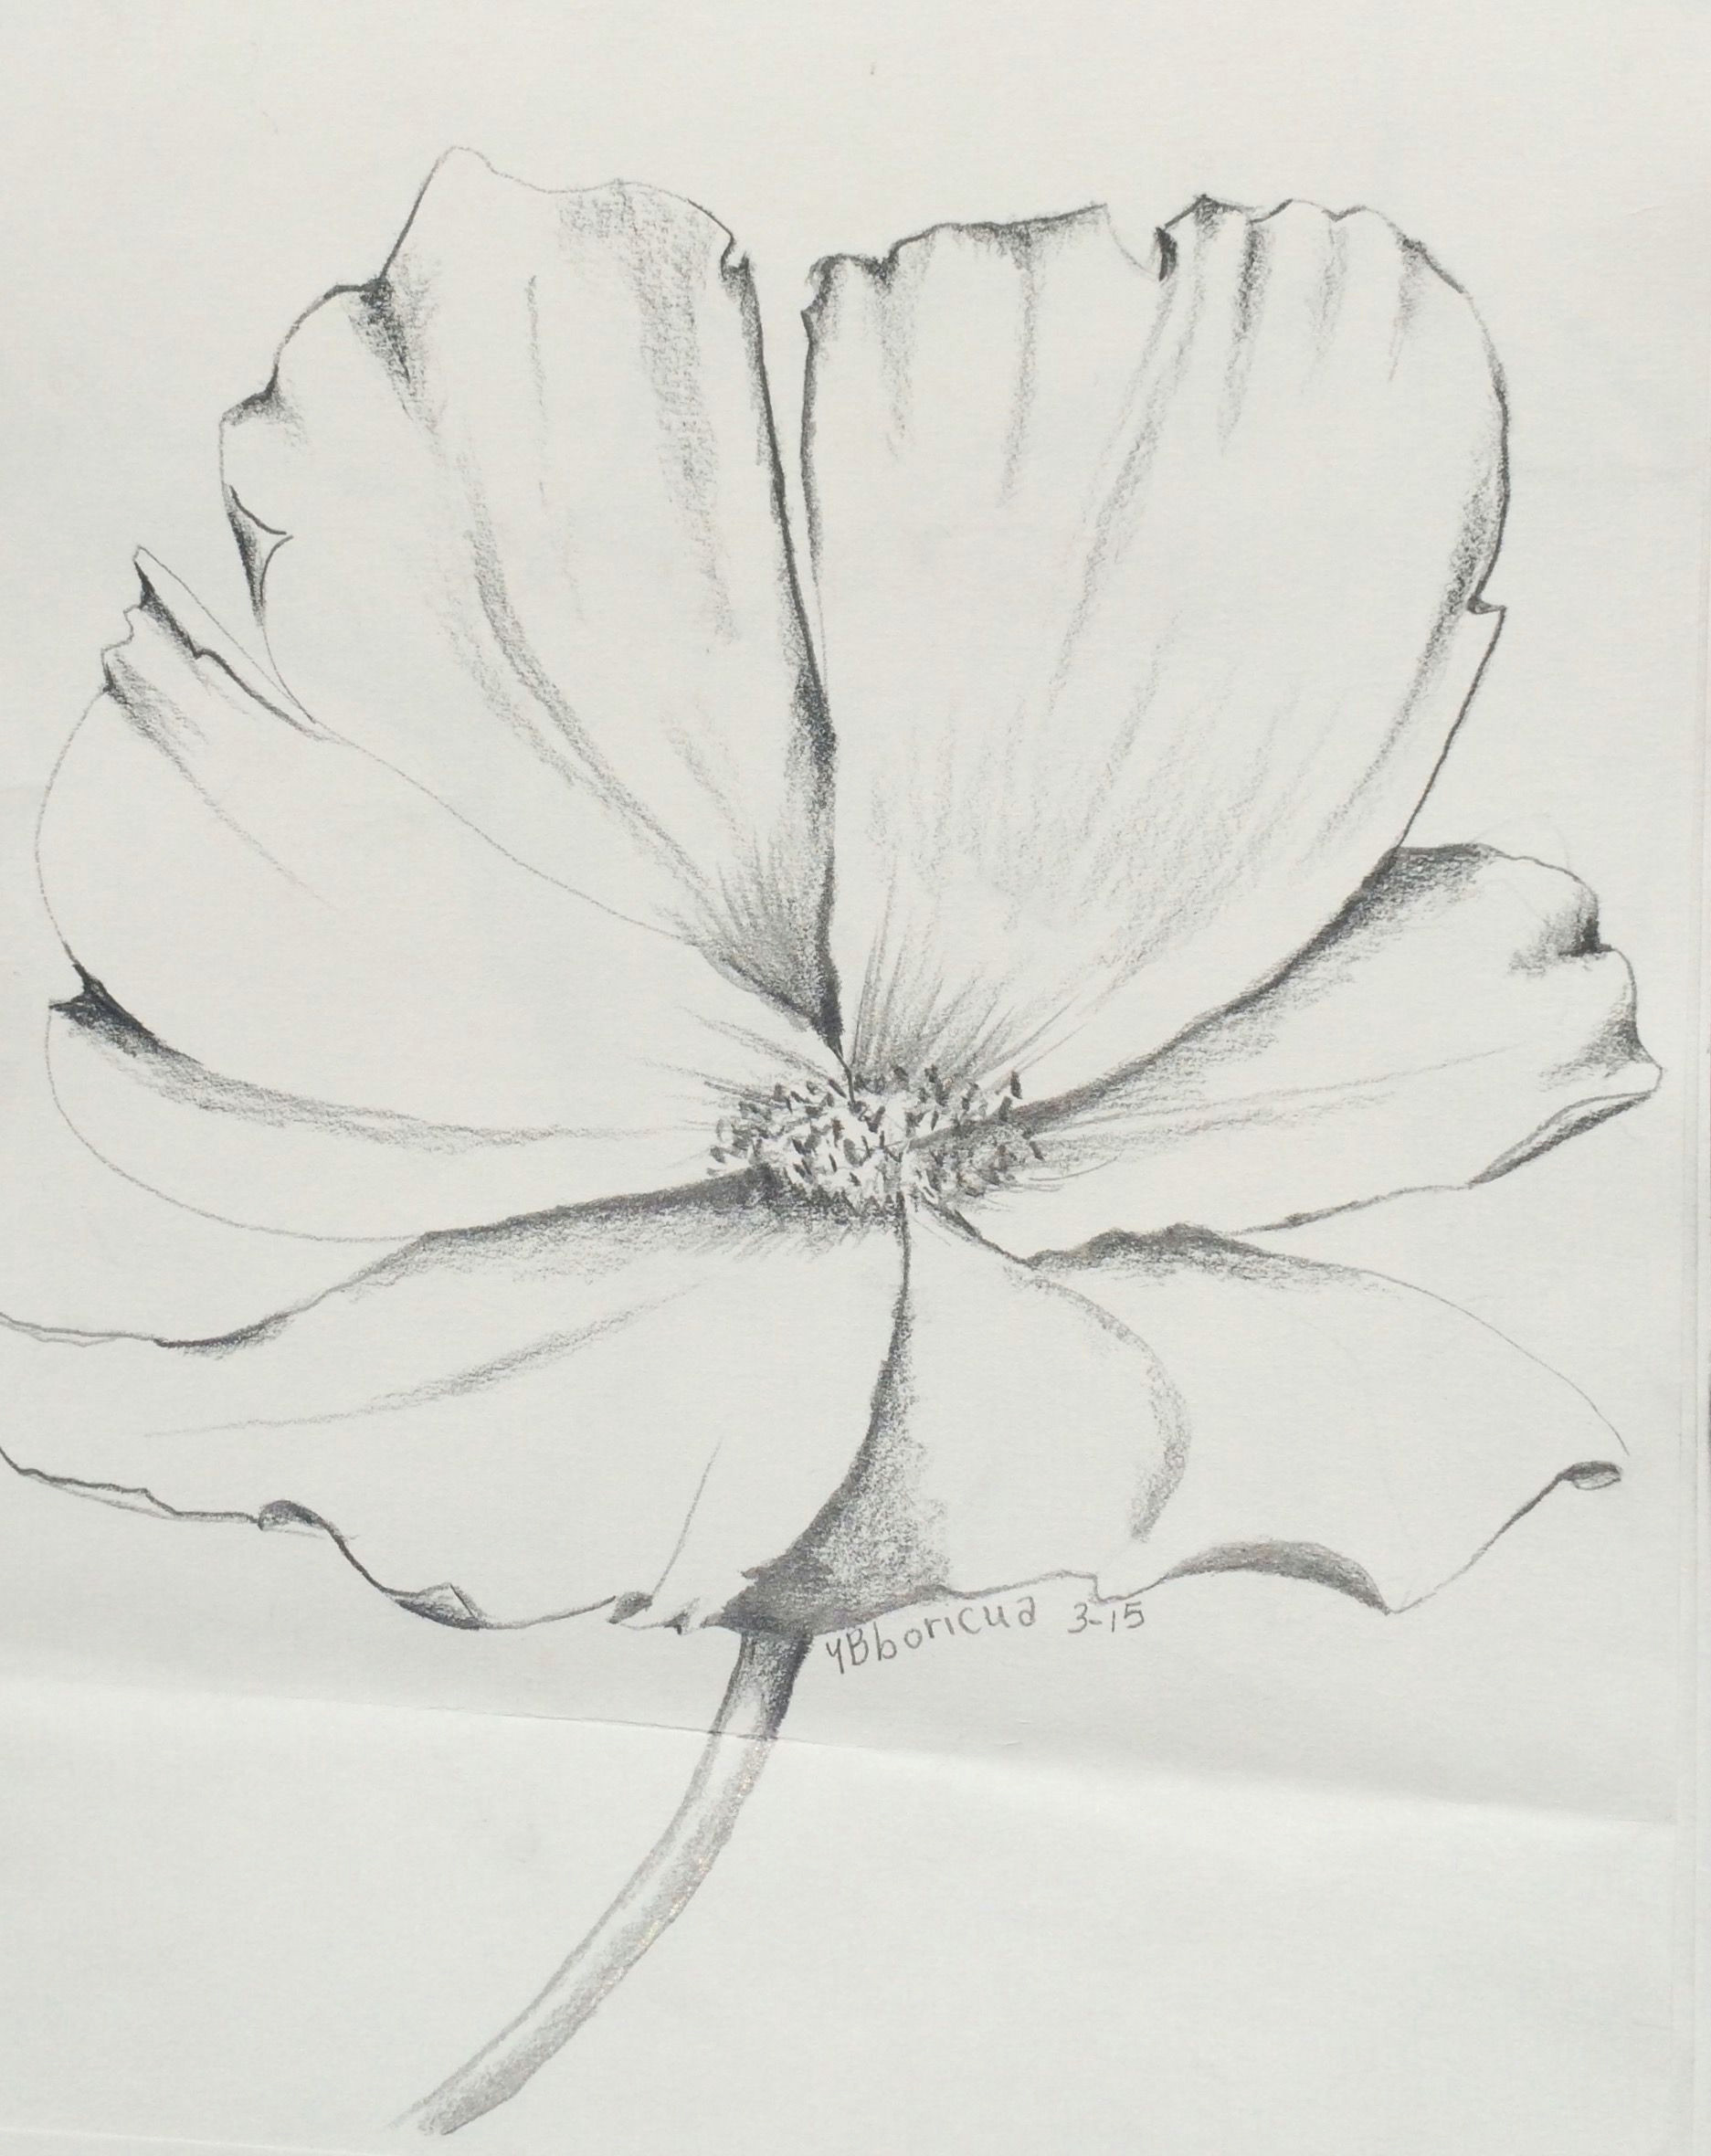 Graphite Drawing Flowers Flower 7 Artist Ybboricua Description original Pencil Drawing